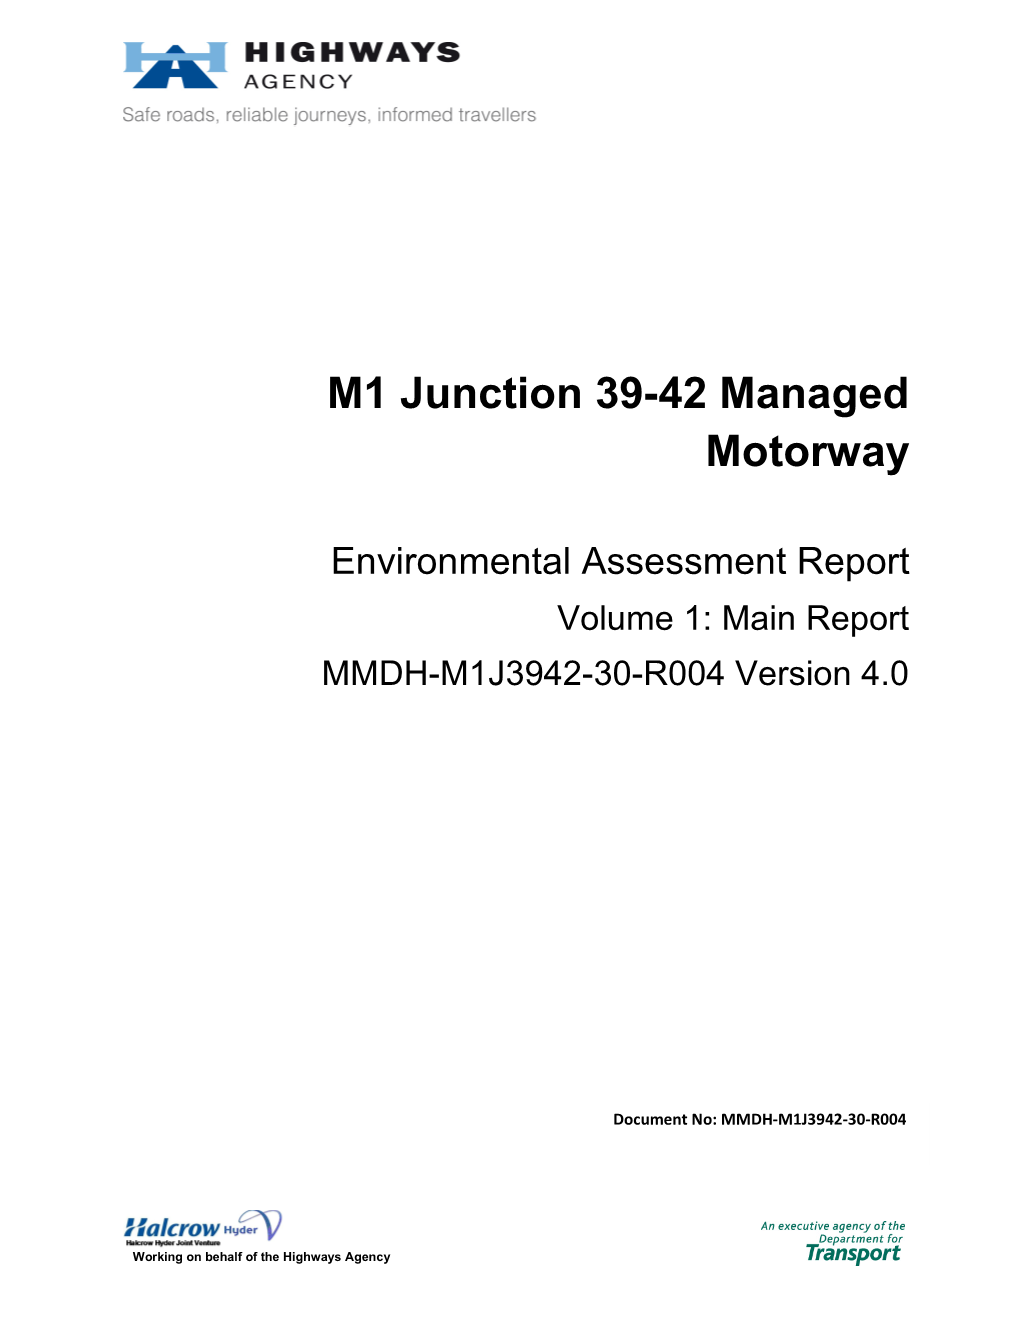 M1 Junction 39-42 Managed Motorway